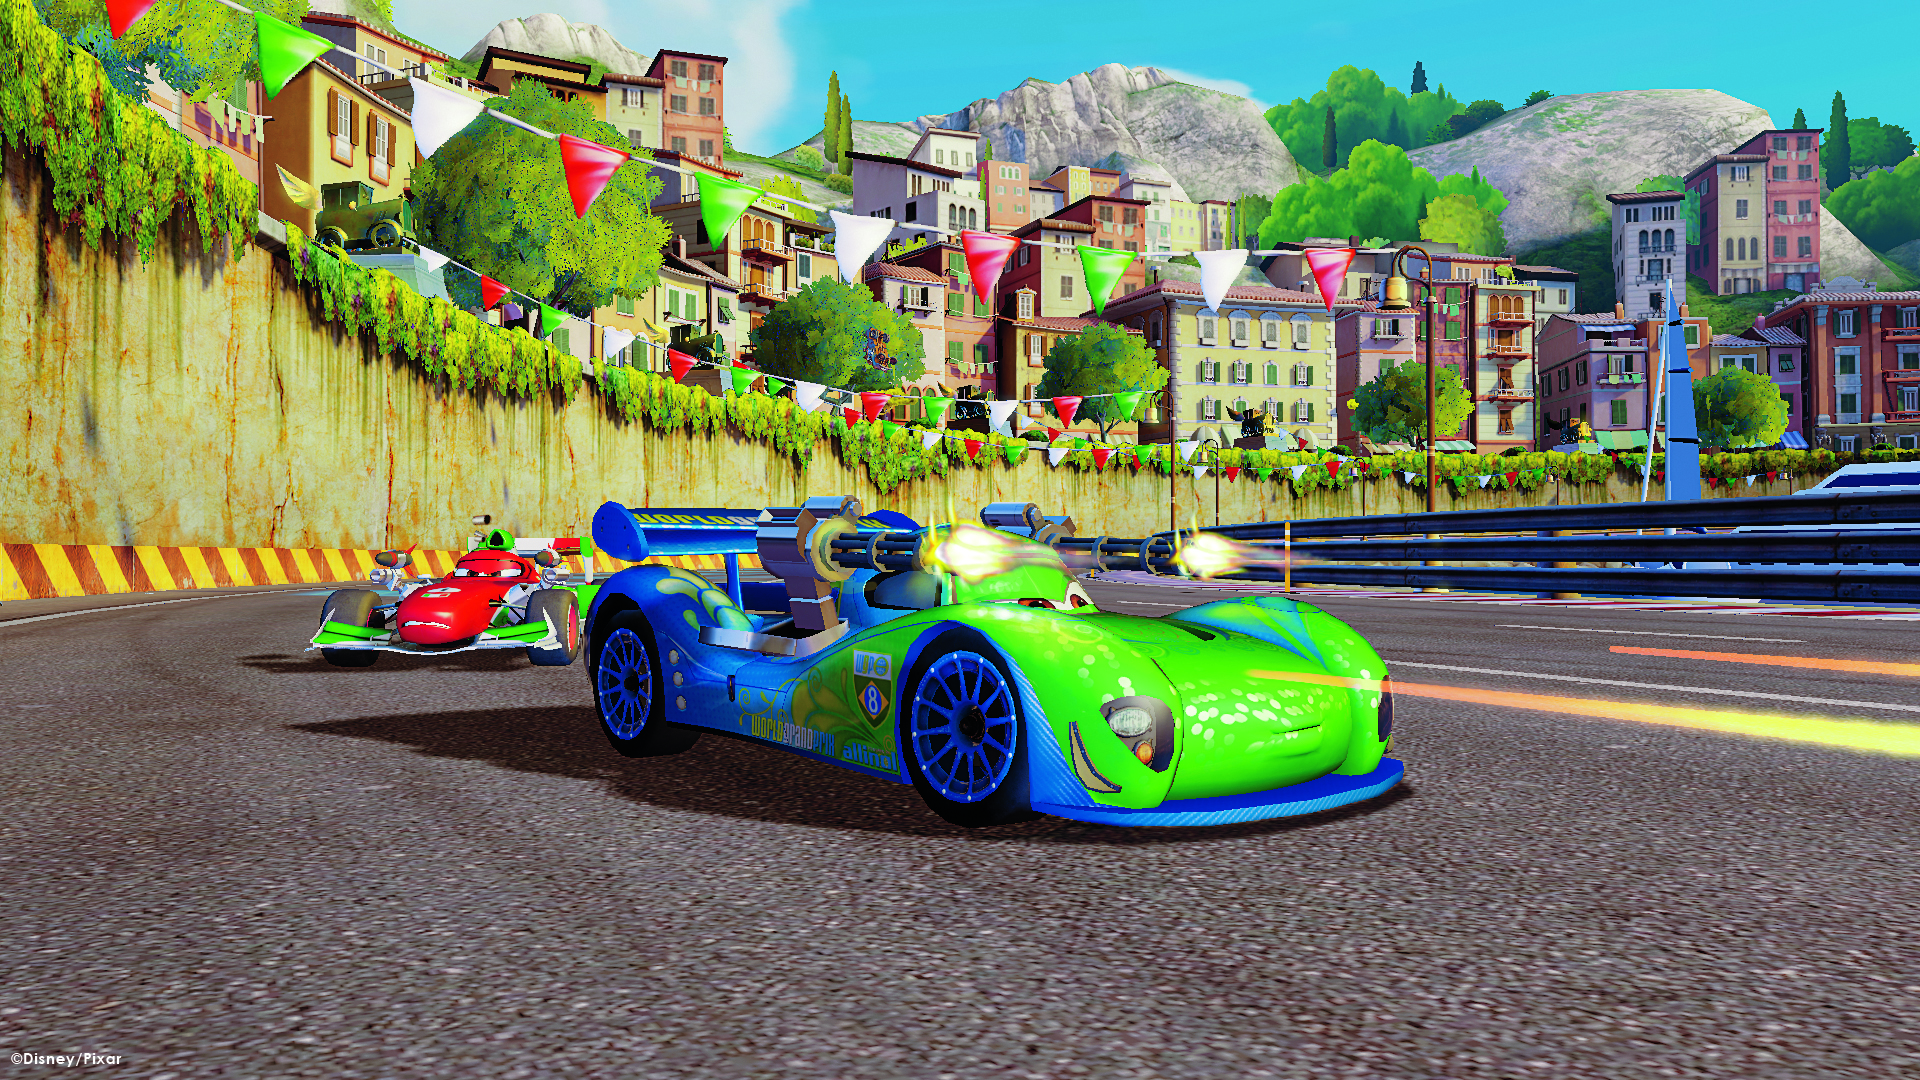 cars 3 game download free